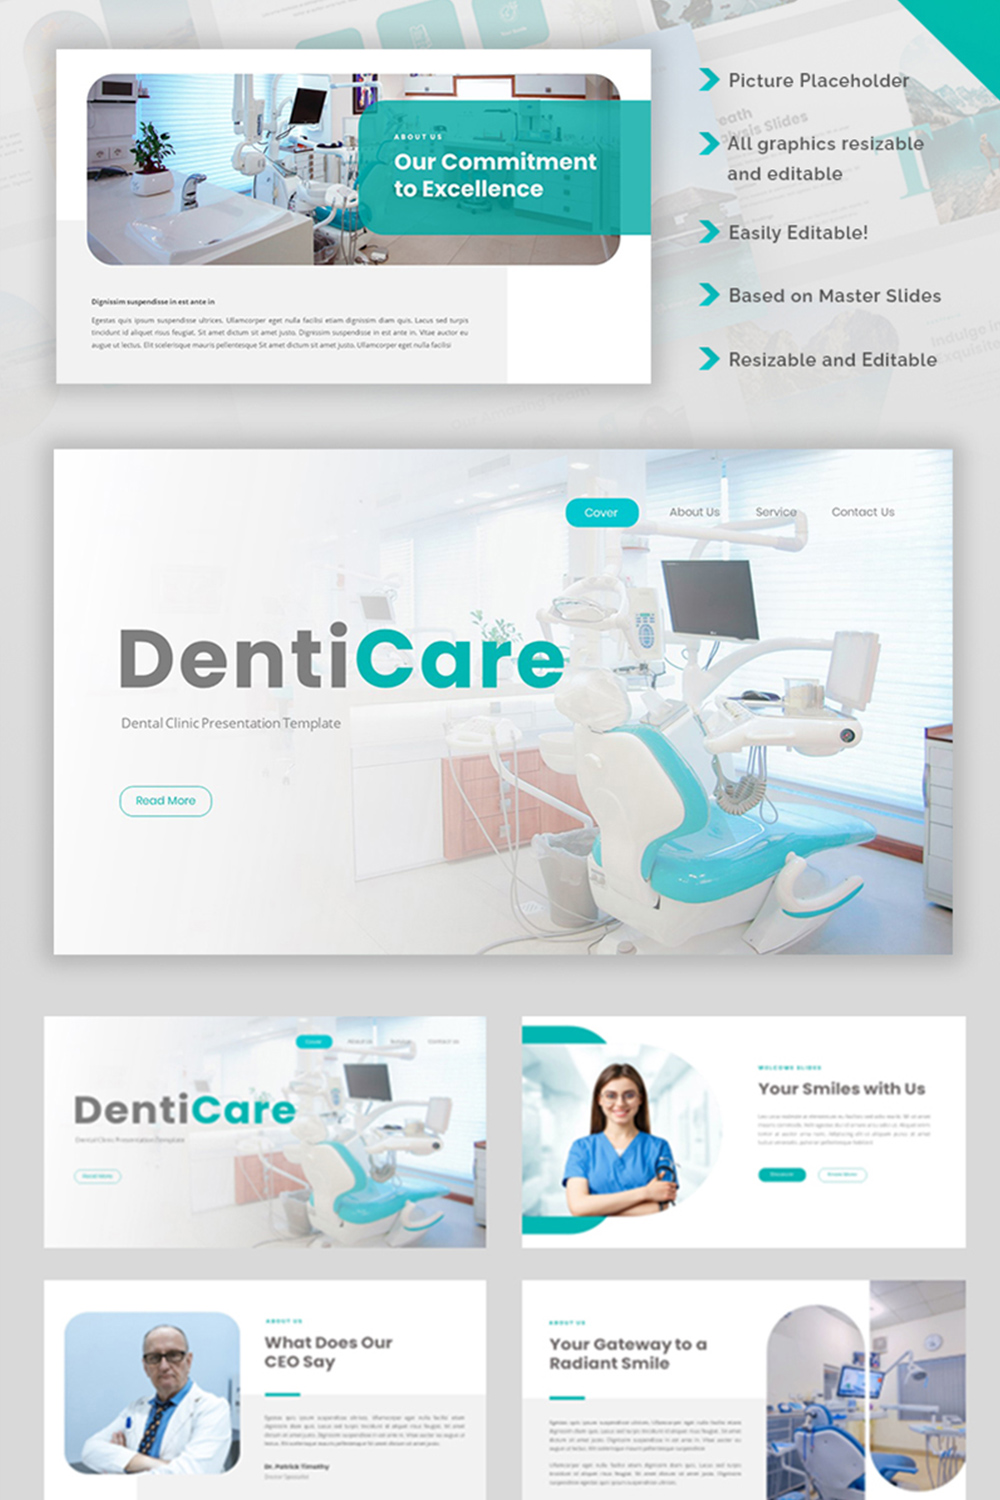 DentiCare-Dental Clinic Keynote Template pinterest preview image.